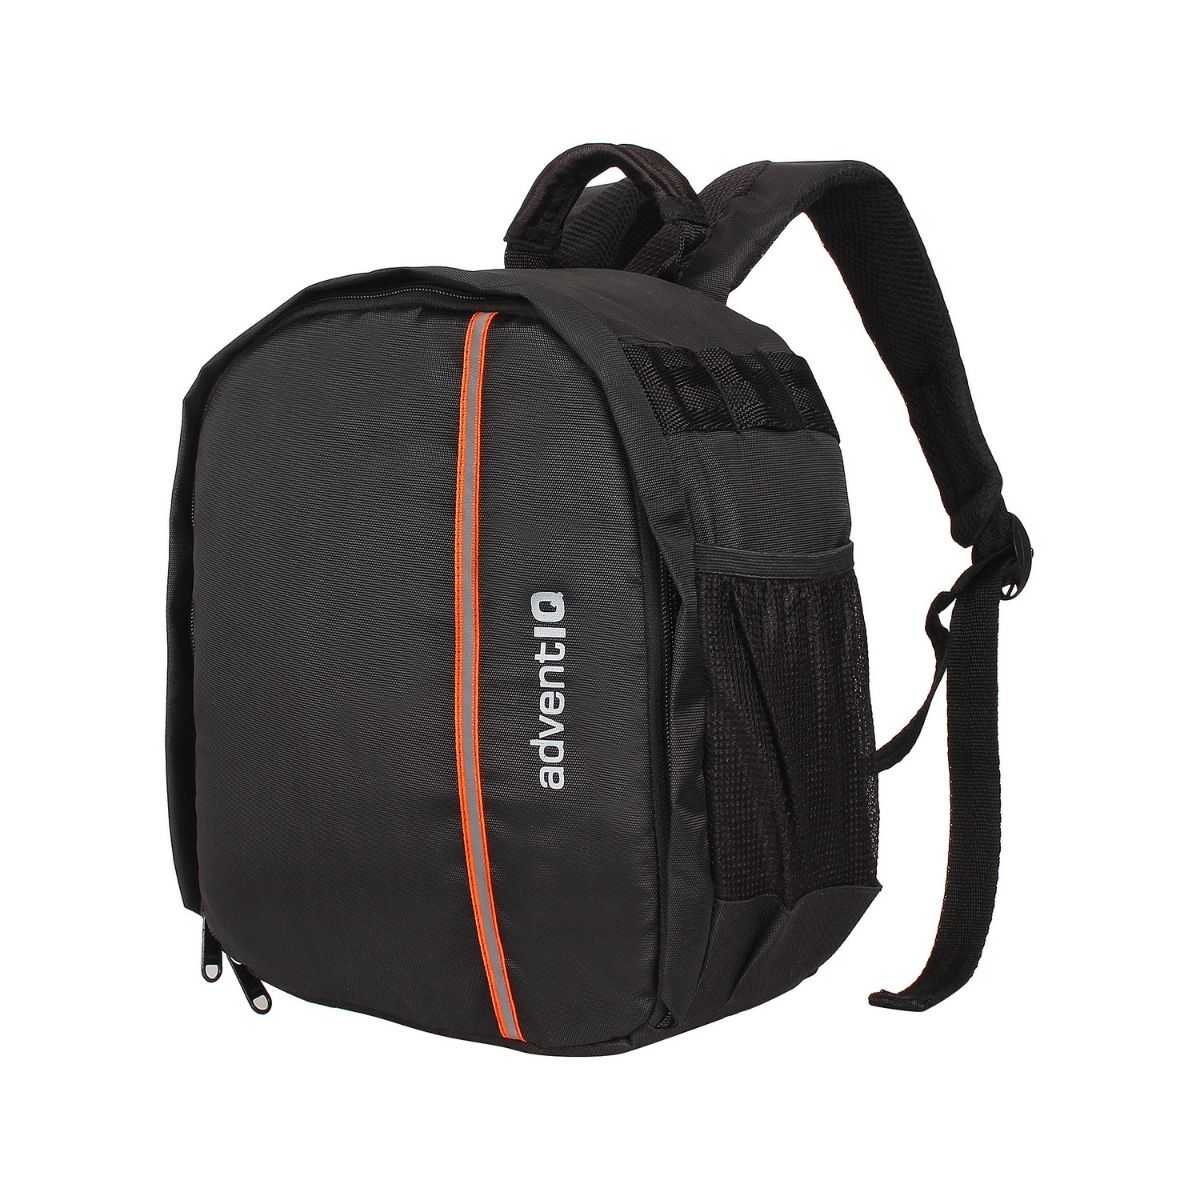 AdventIQ: DSLR / SLR Camera Backpack - Outdoor Travel Gear 2